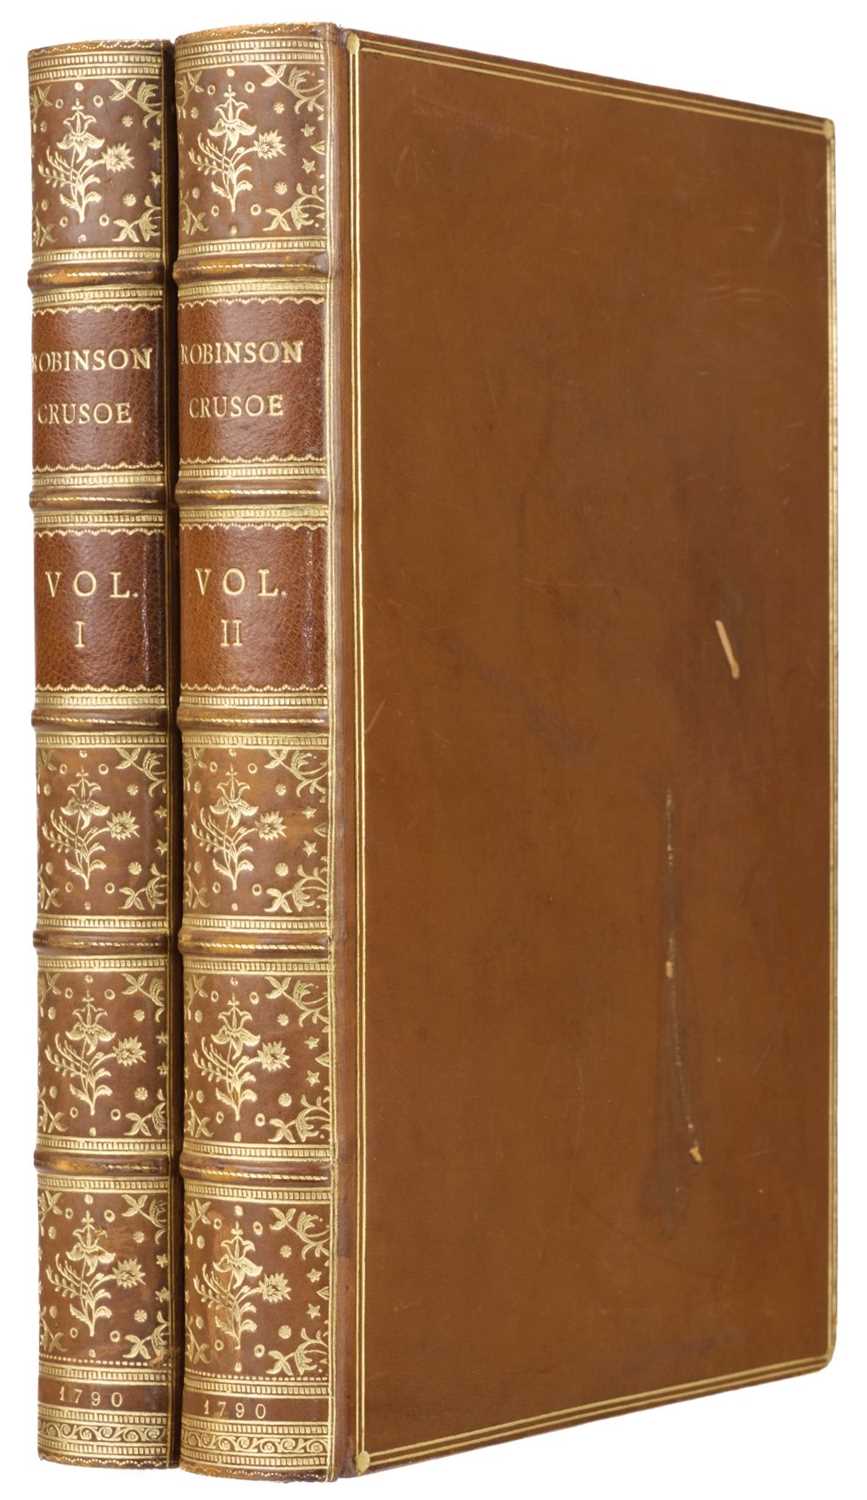 Lot 300 - Defoe (Daniel). The Life and Strange Surprizing Adventures of Robinson Crusoe, 2 volumes, 1790